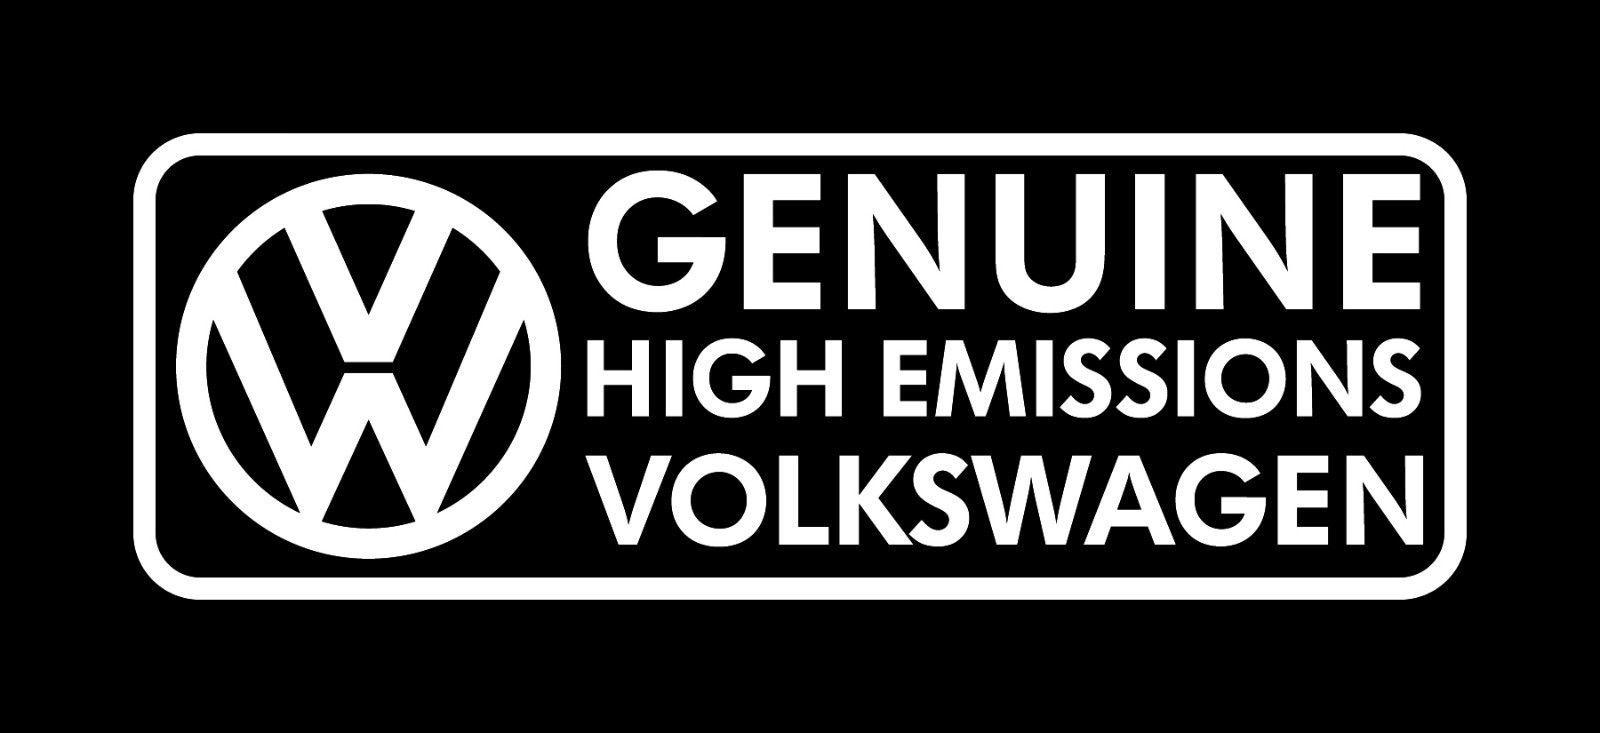 Rustic VW Logo - VW Volkswagen High Emissions Vinyl Sticker Decal Bug Bus Ghia Split